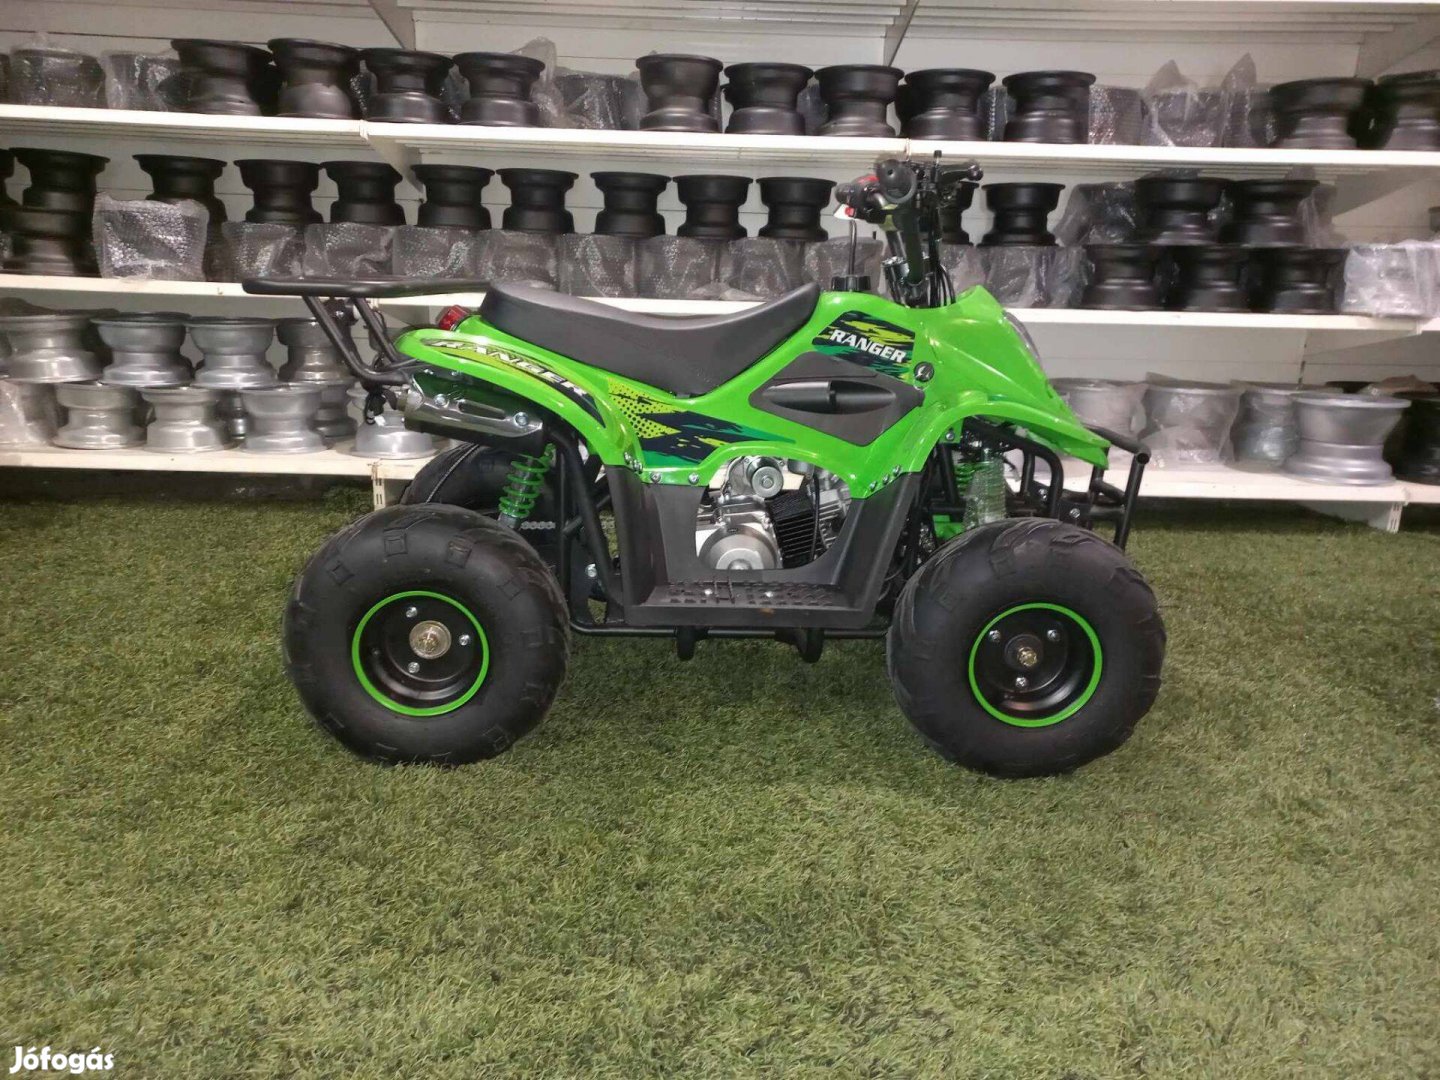 Kxd 001 Ranger gyerek quad 110cc green color